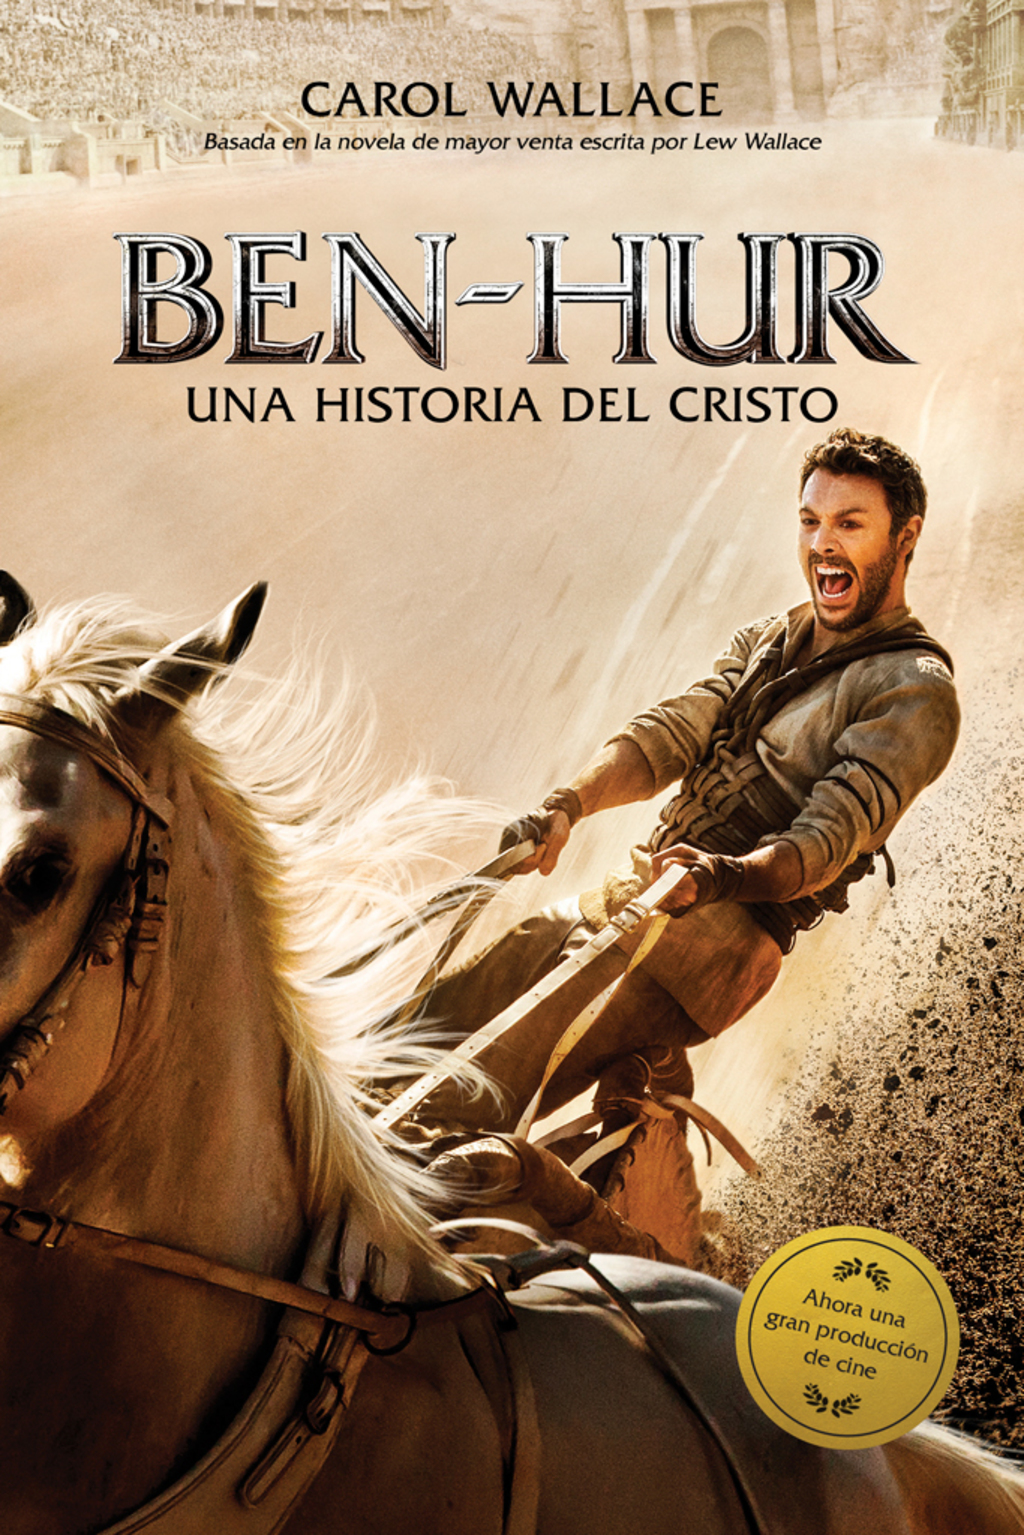 Ben-Hur (eBook) - Carol Wallace